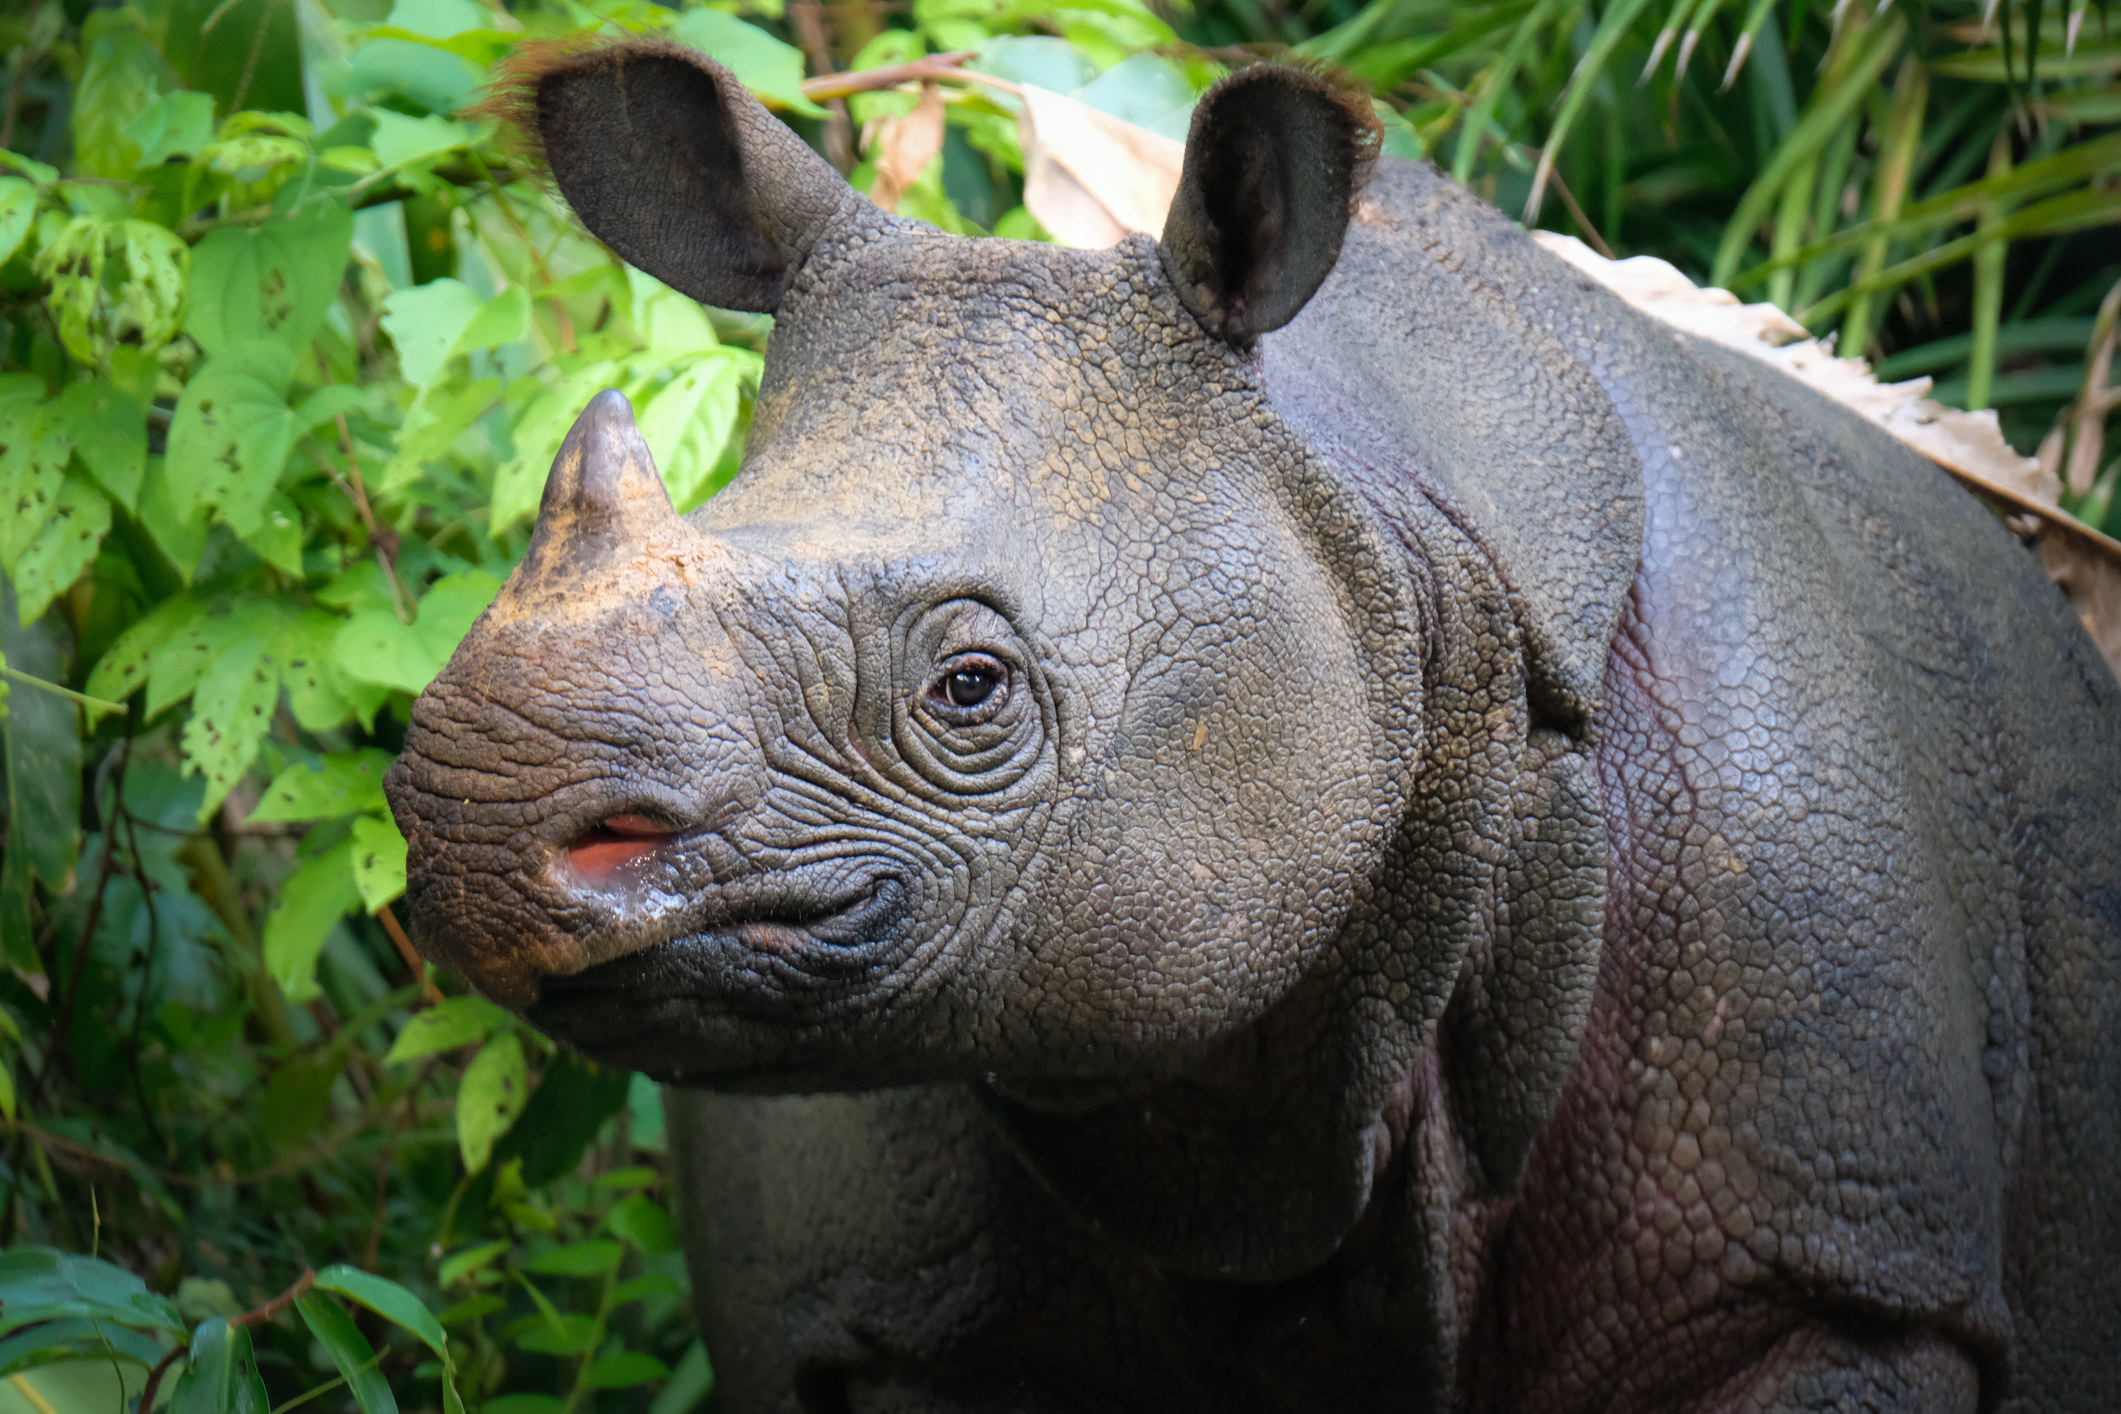 A close-up of a rhino looking at the camera